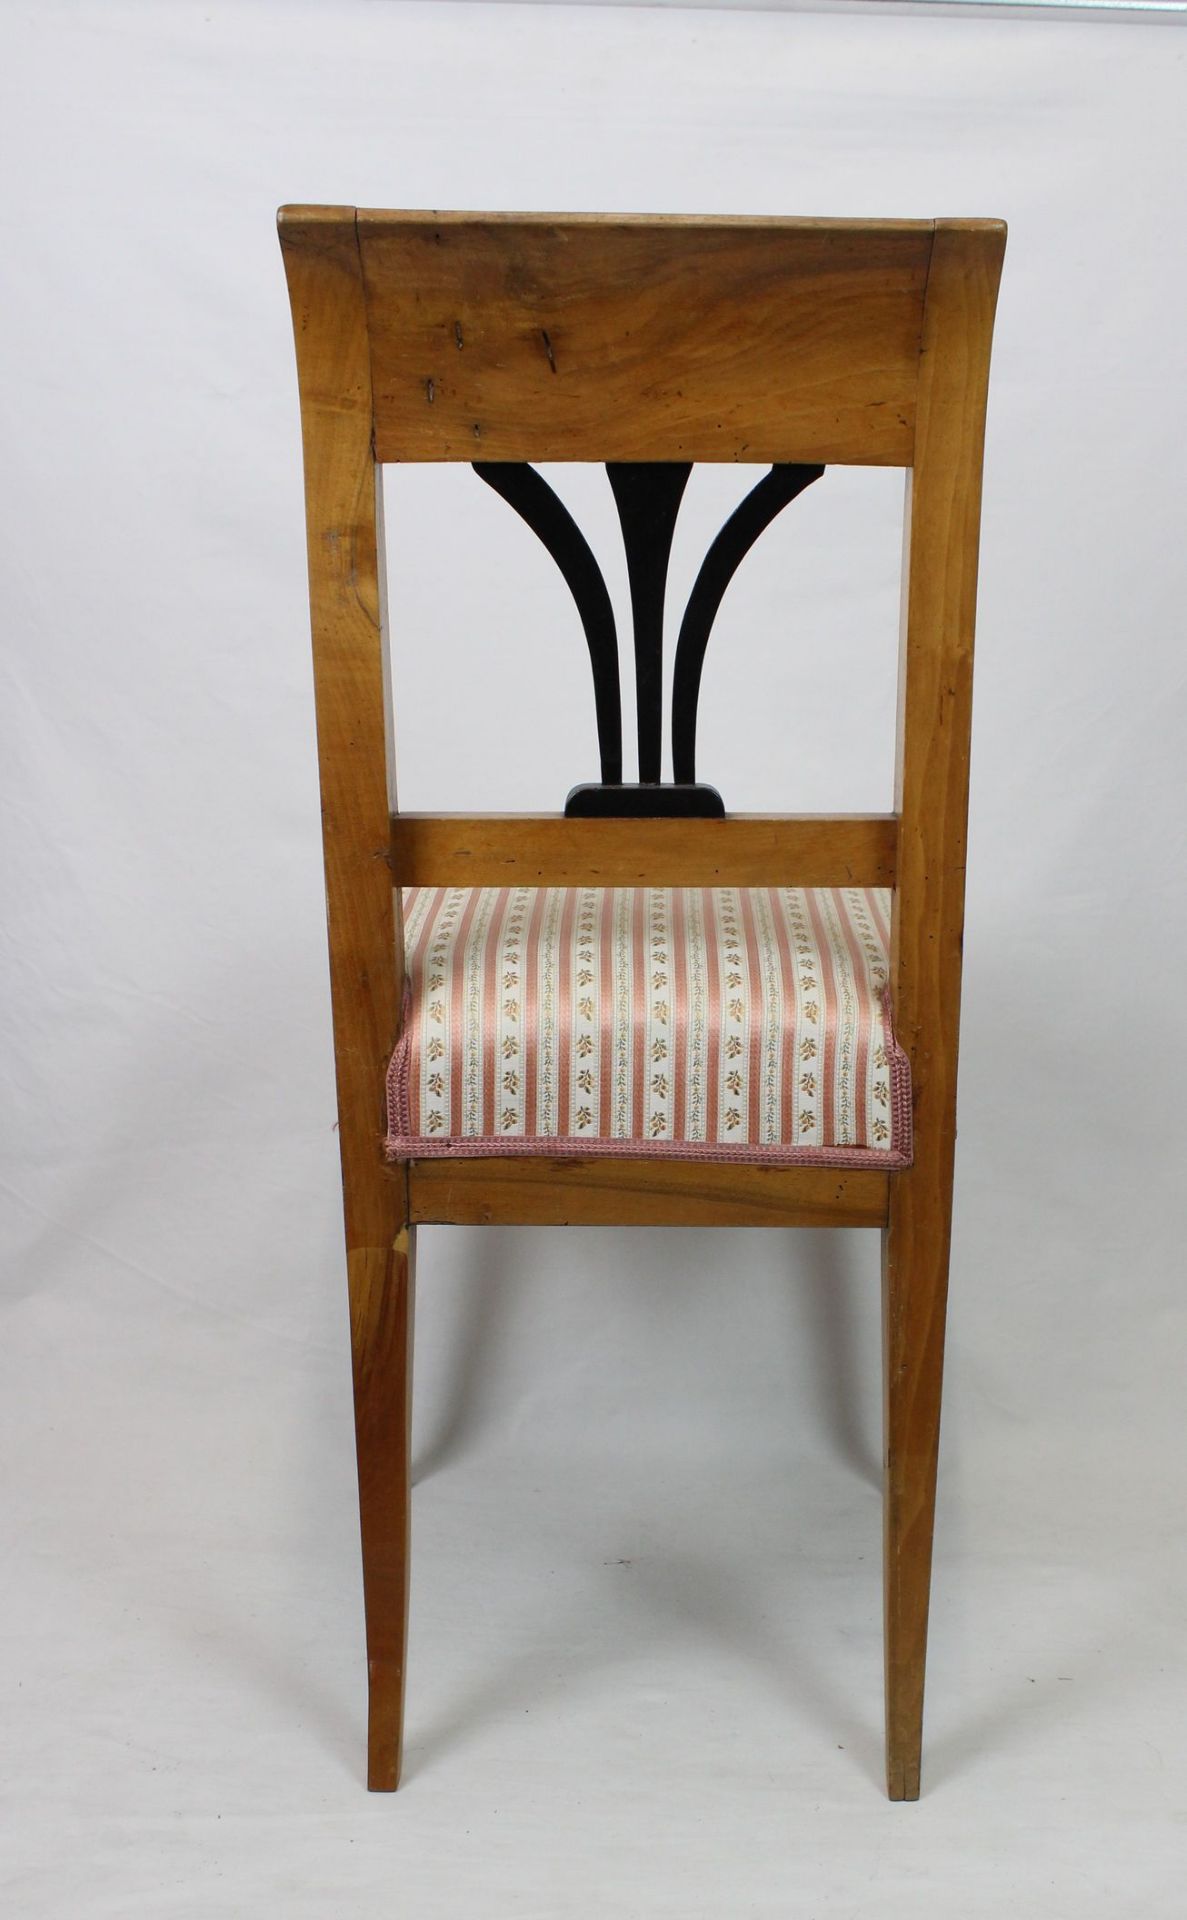 Biedemeier Stuhl mit neuwertigem Bezug - Image 3 of 3